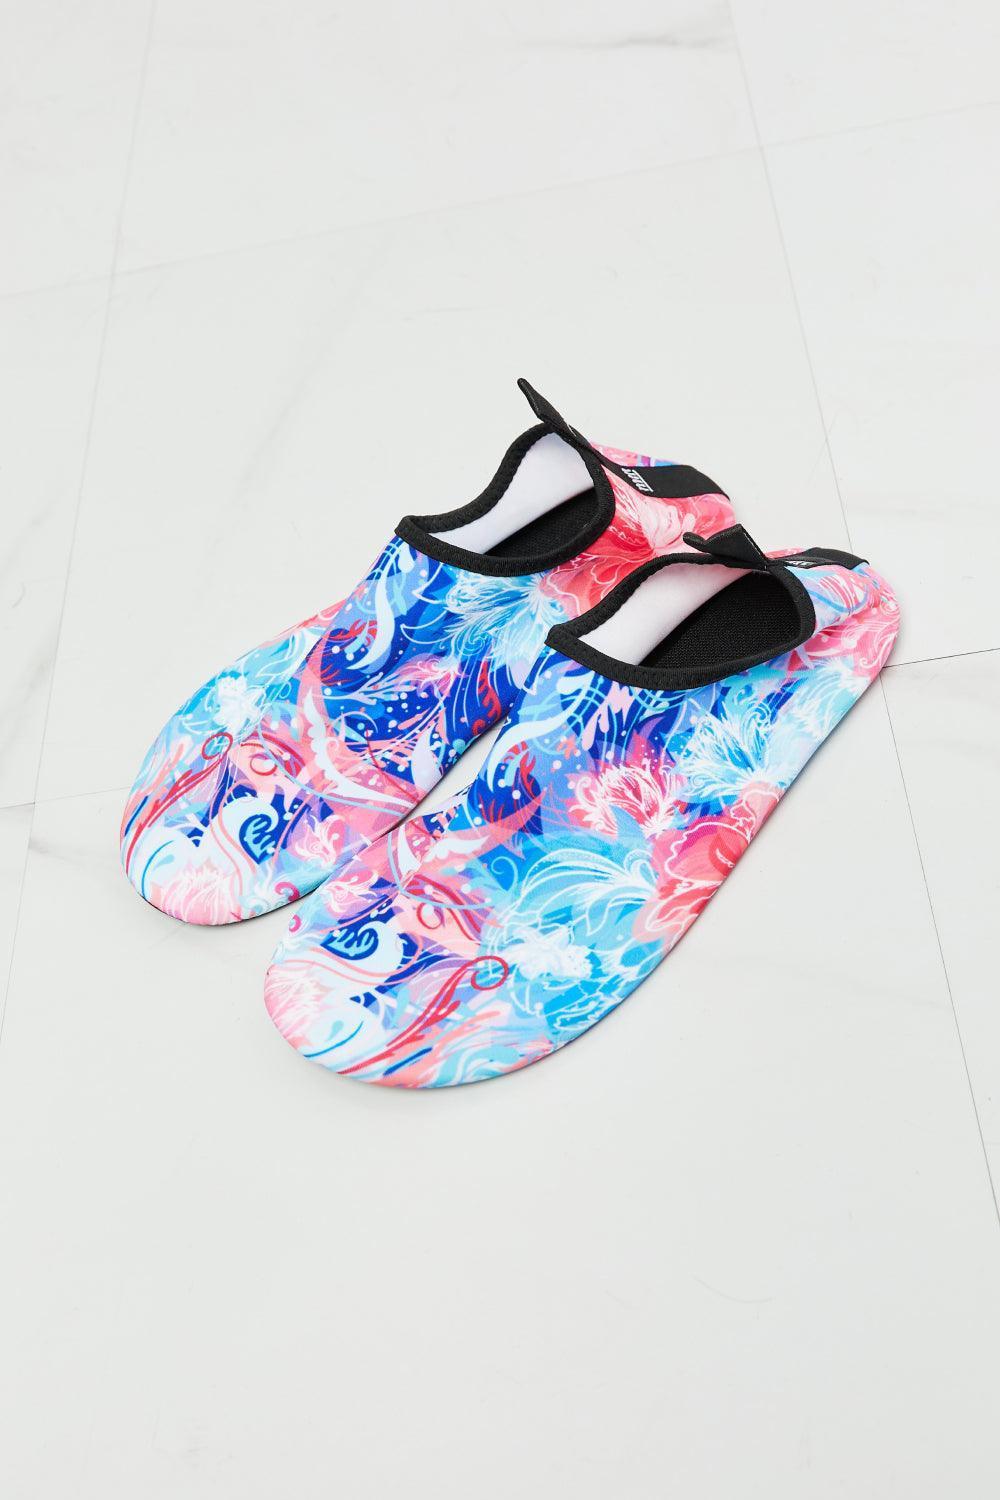 MMshoes Coastline Multicolored Women Beach Shoes - MXSTUDIO.COM